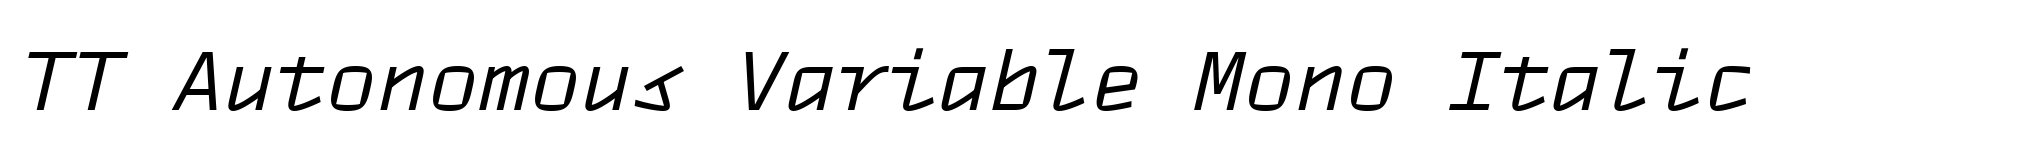 TT Autonomous Variable Mono Italic image